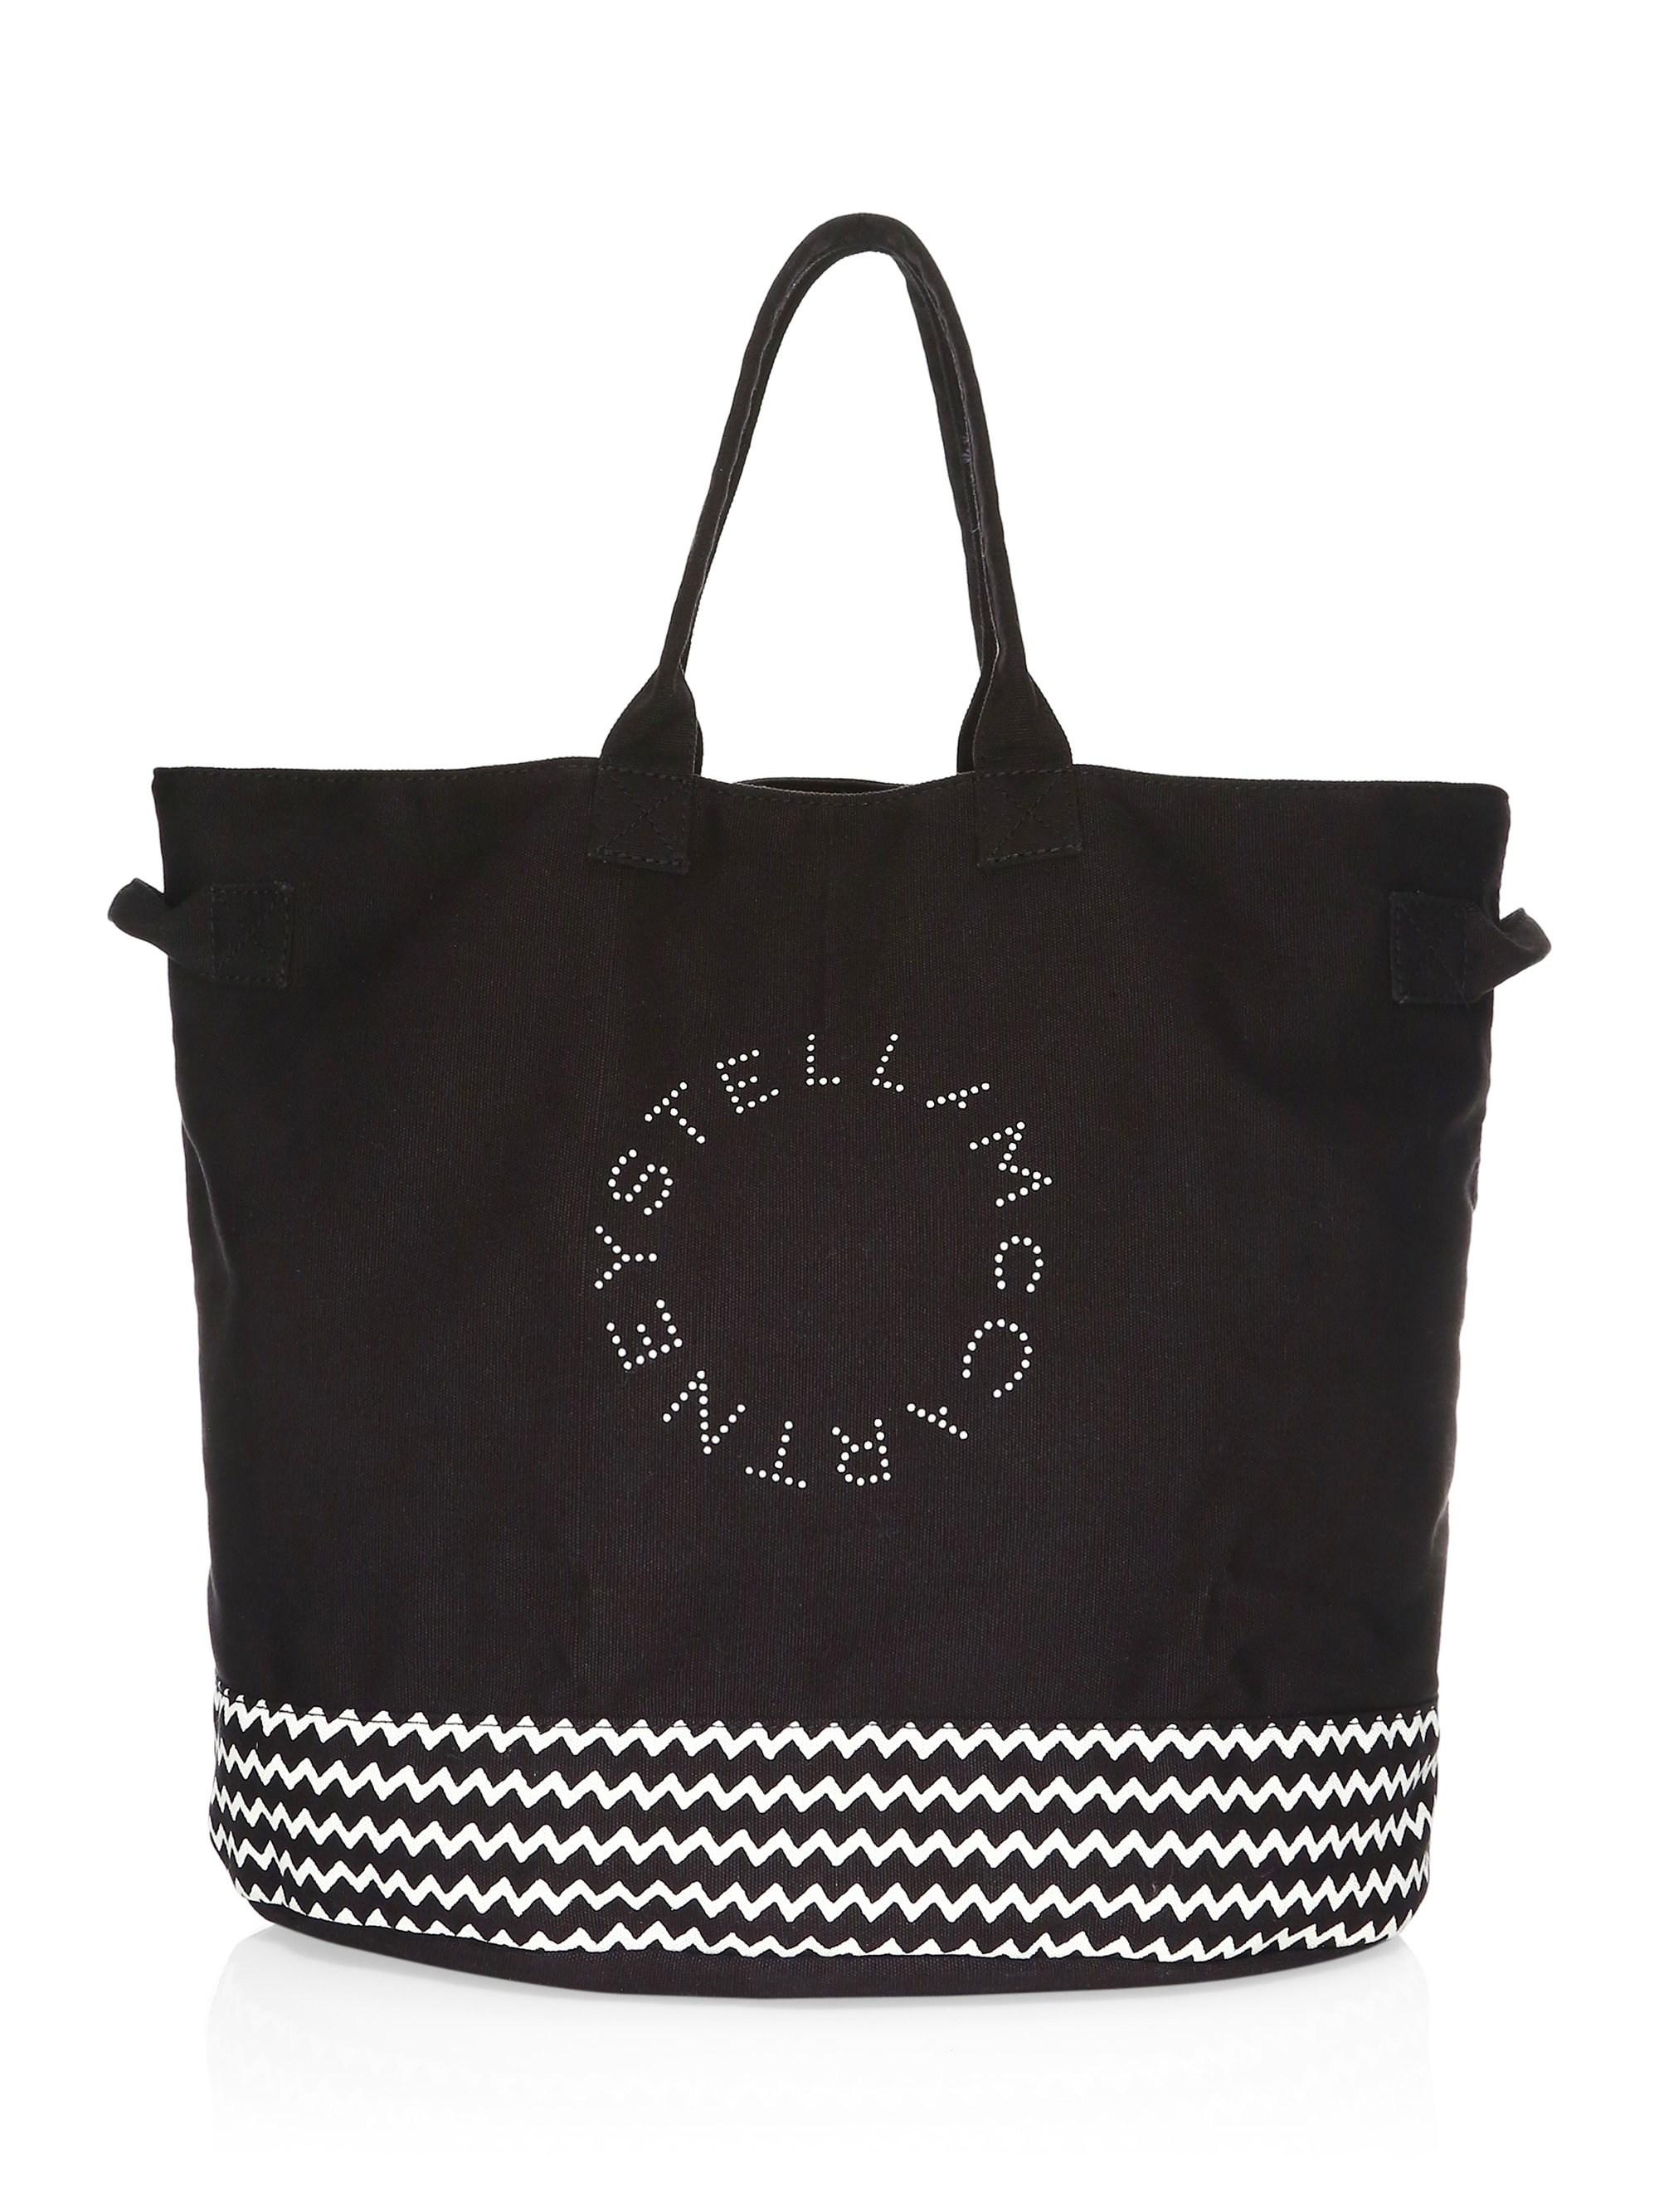 Stella McCartney Logo Stripe Trim Tote Bag in Black - Lyst